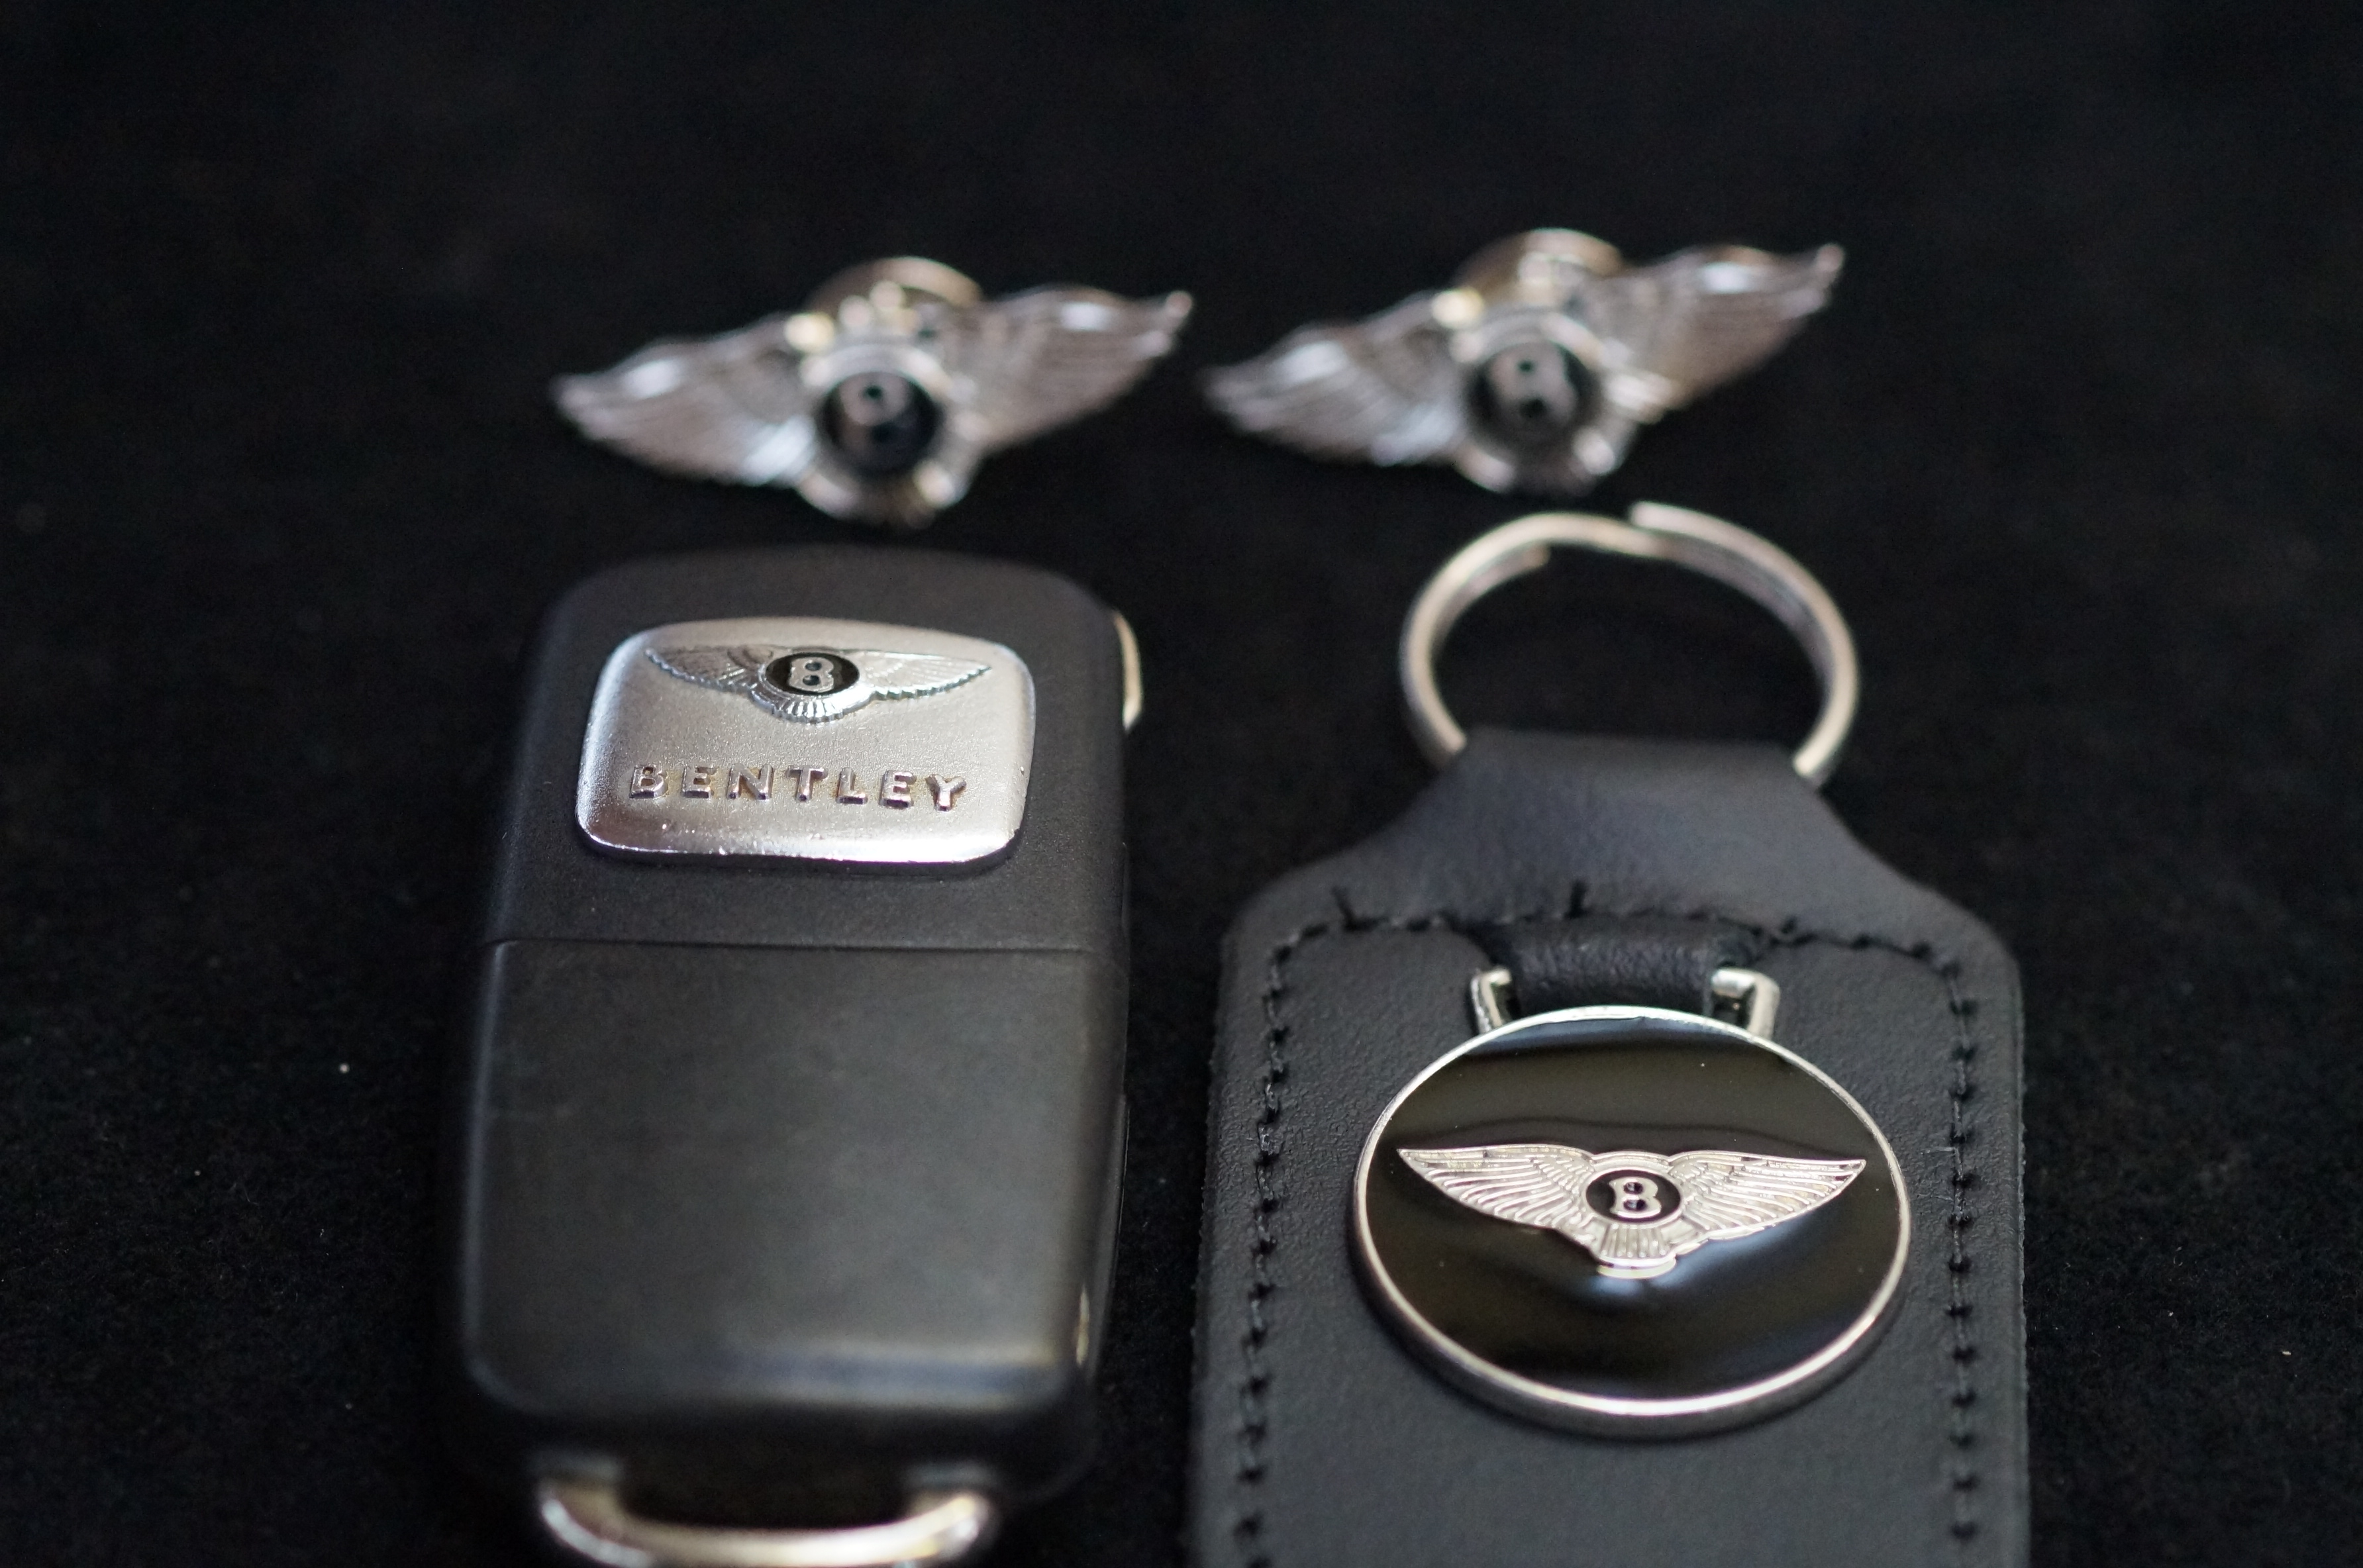 Bentley key fob, key ring & 2 label badges